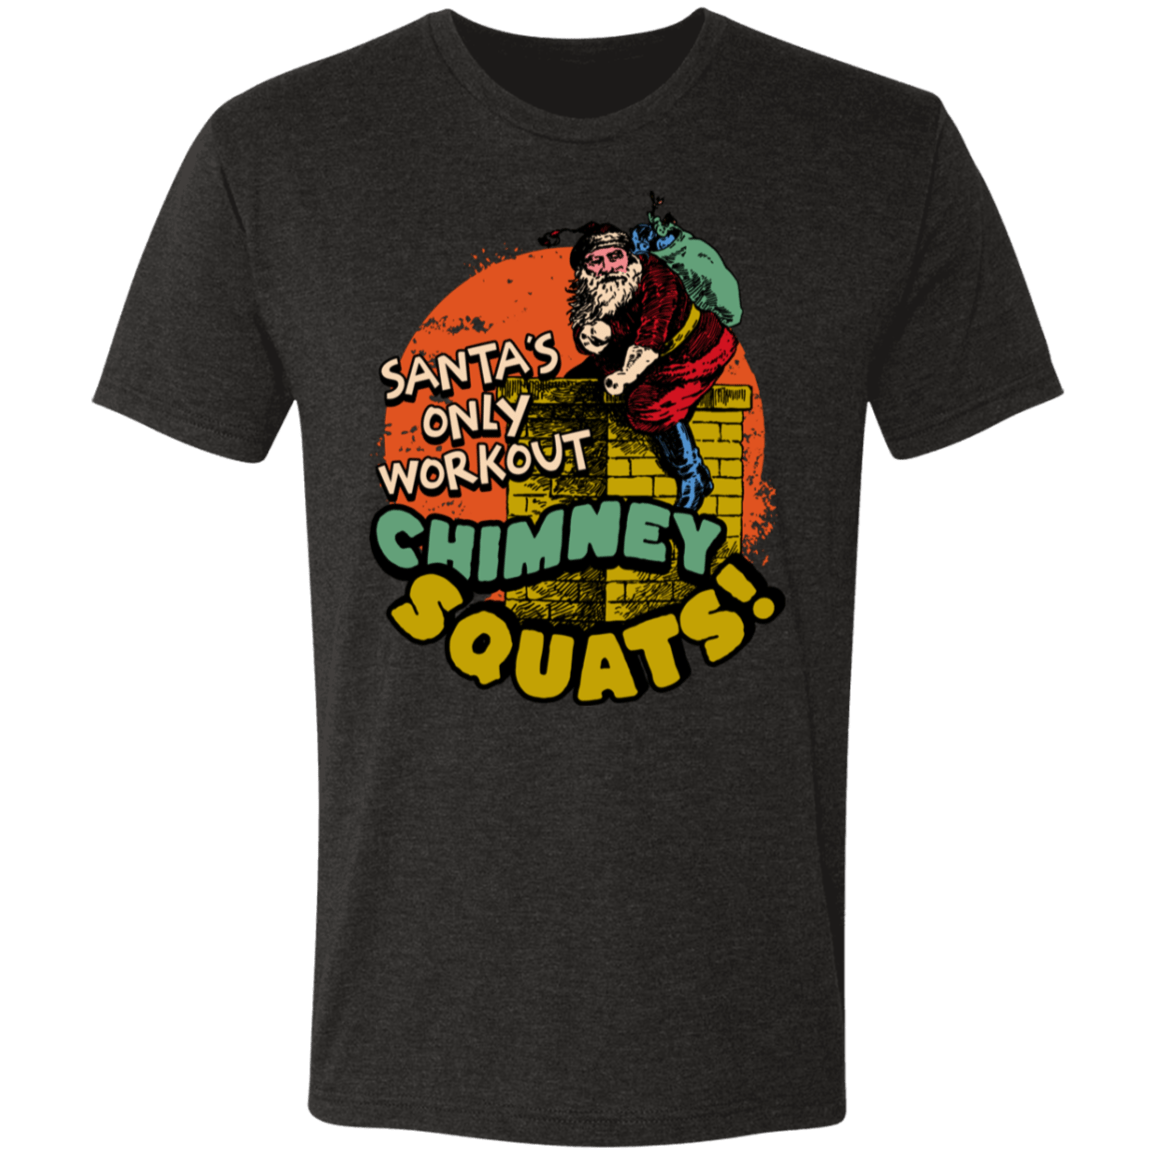 Chimney Squats Tri-blend Gym Tee - T-Shirts